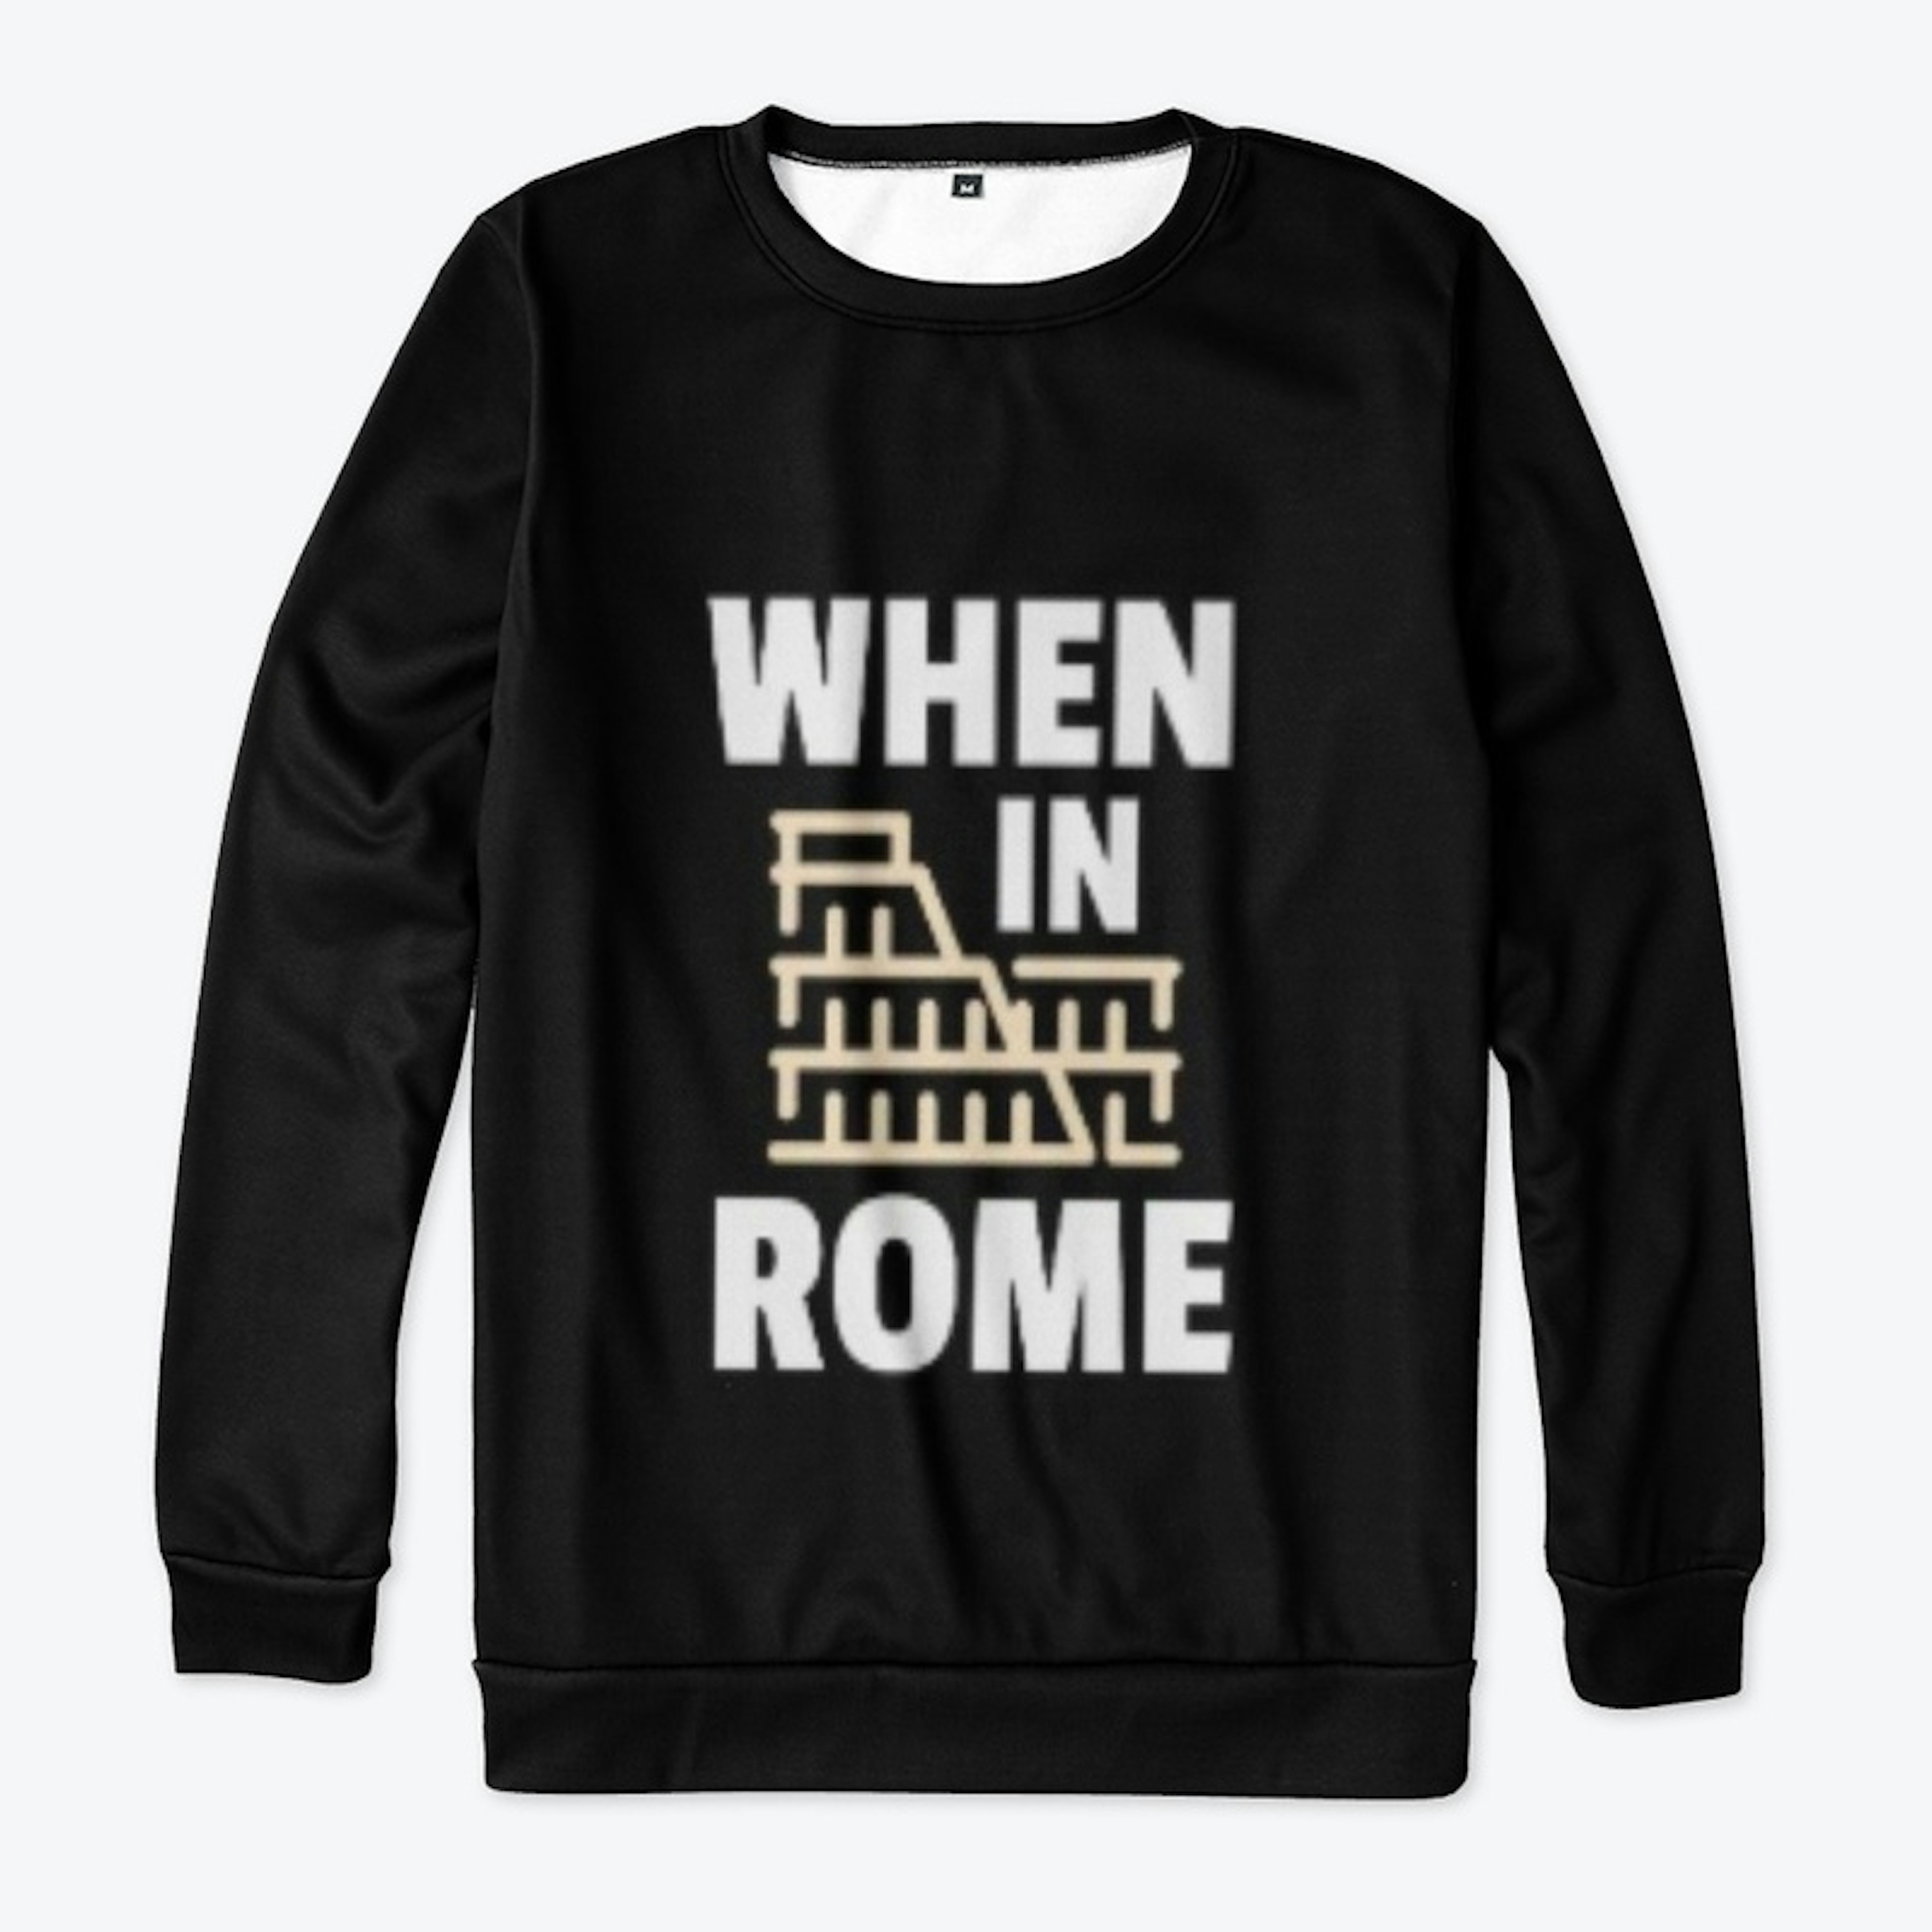 WHEN IN ROME